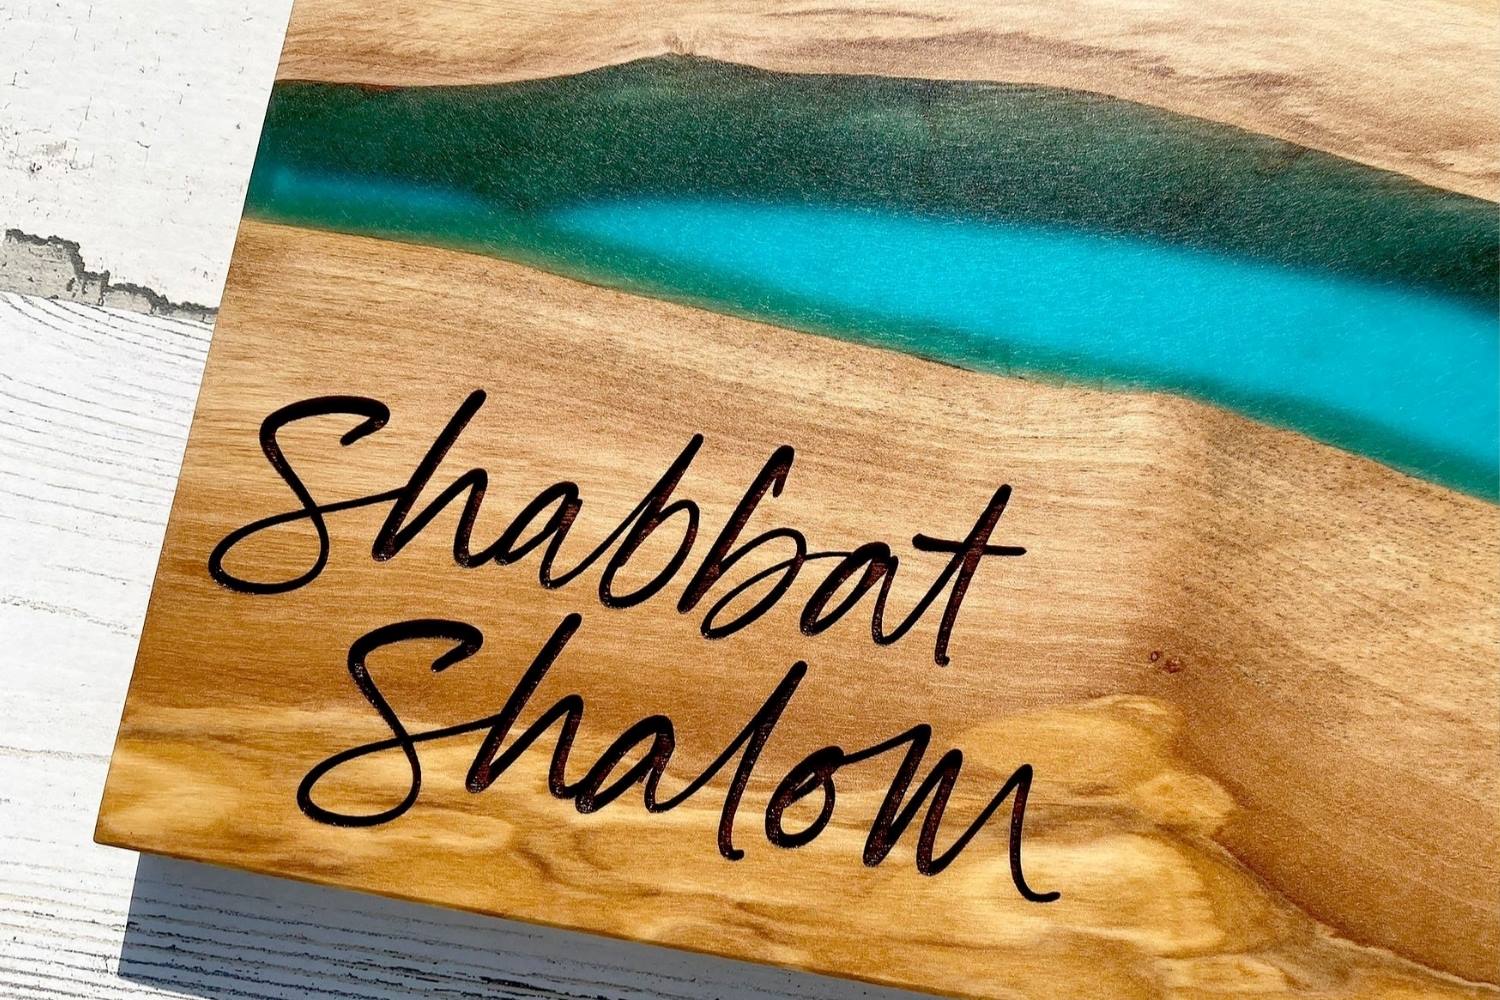 The Perfect Response To “Shabbat Shalom” Revealed!